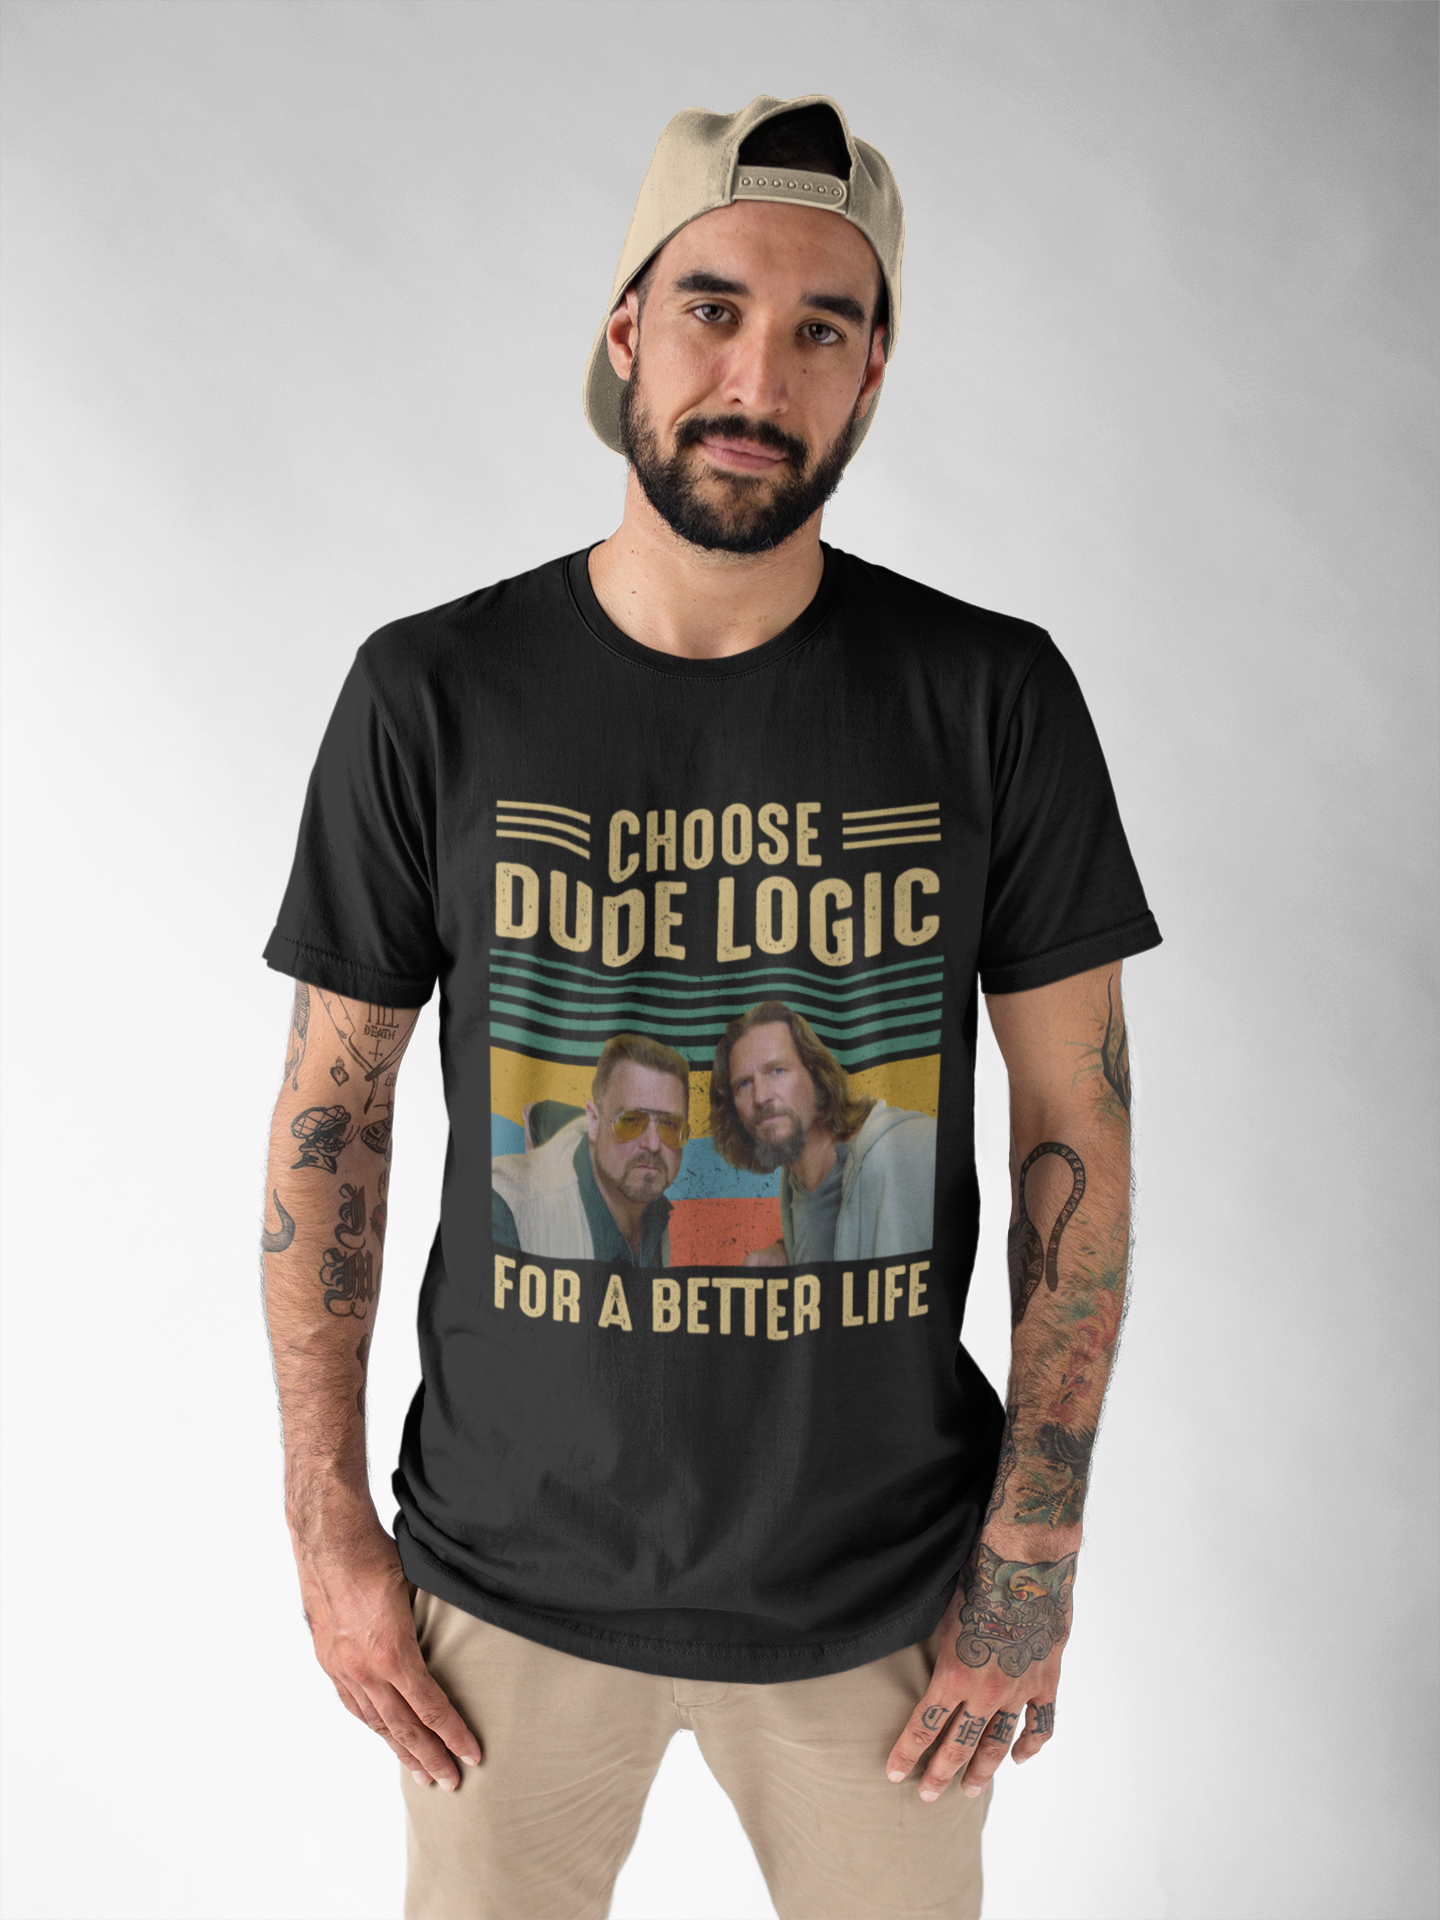 The Big Lebowski T Shirt, The Dude Walter Sobchak T Shirt, Choose Dude Logic For A Better Life Tshirt